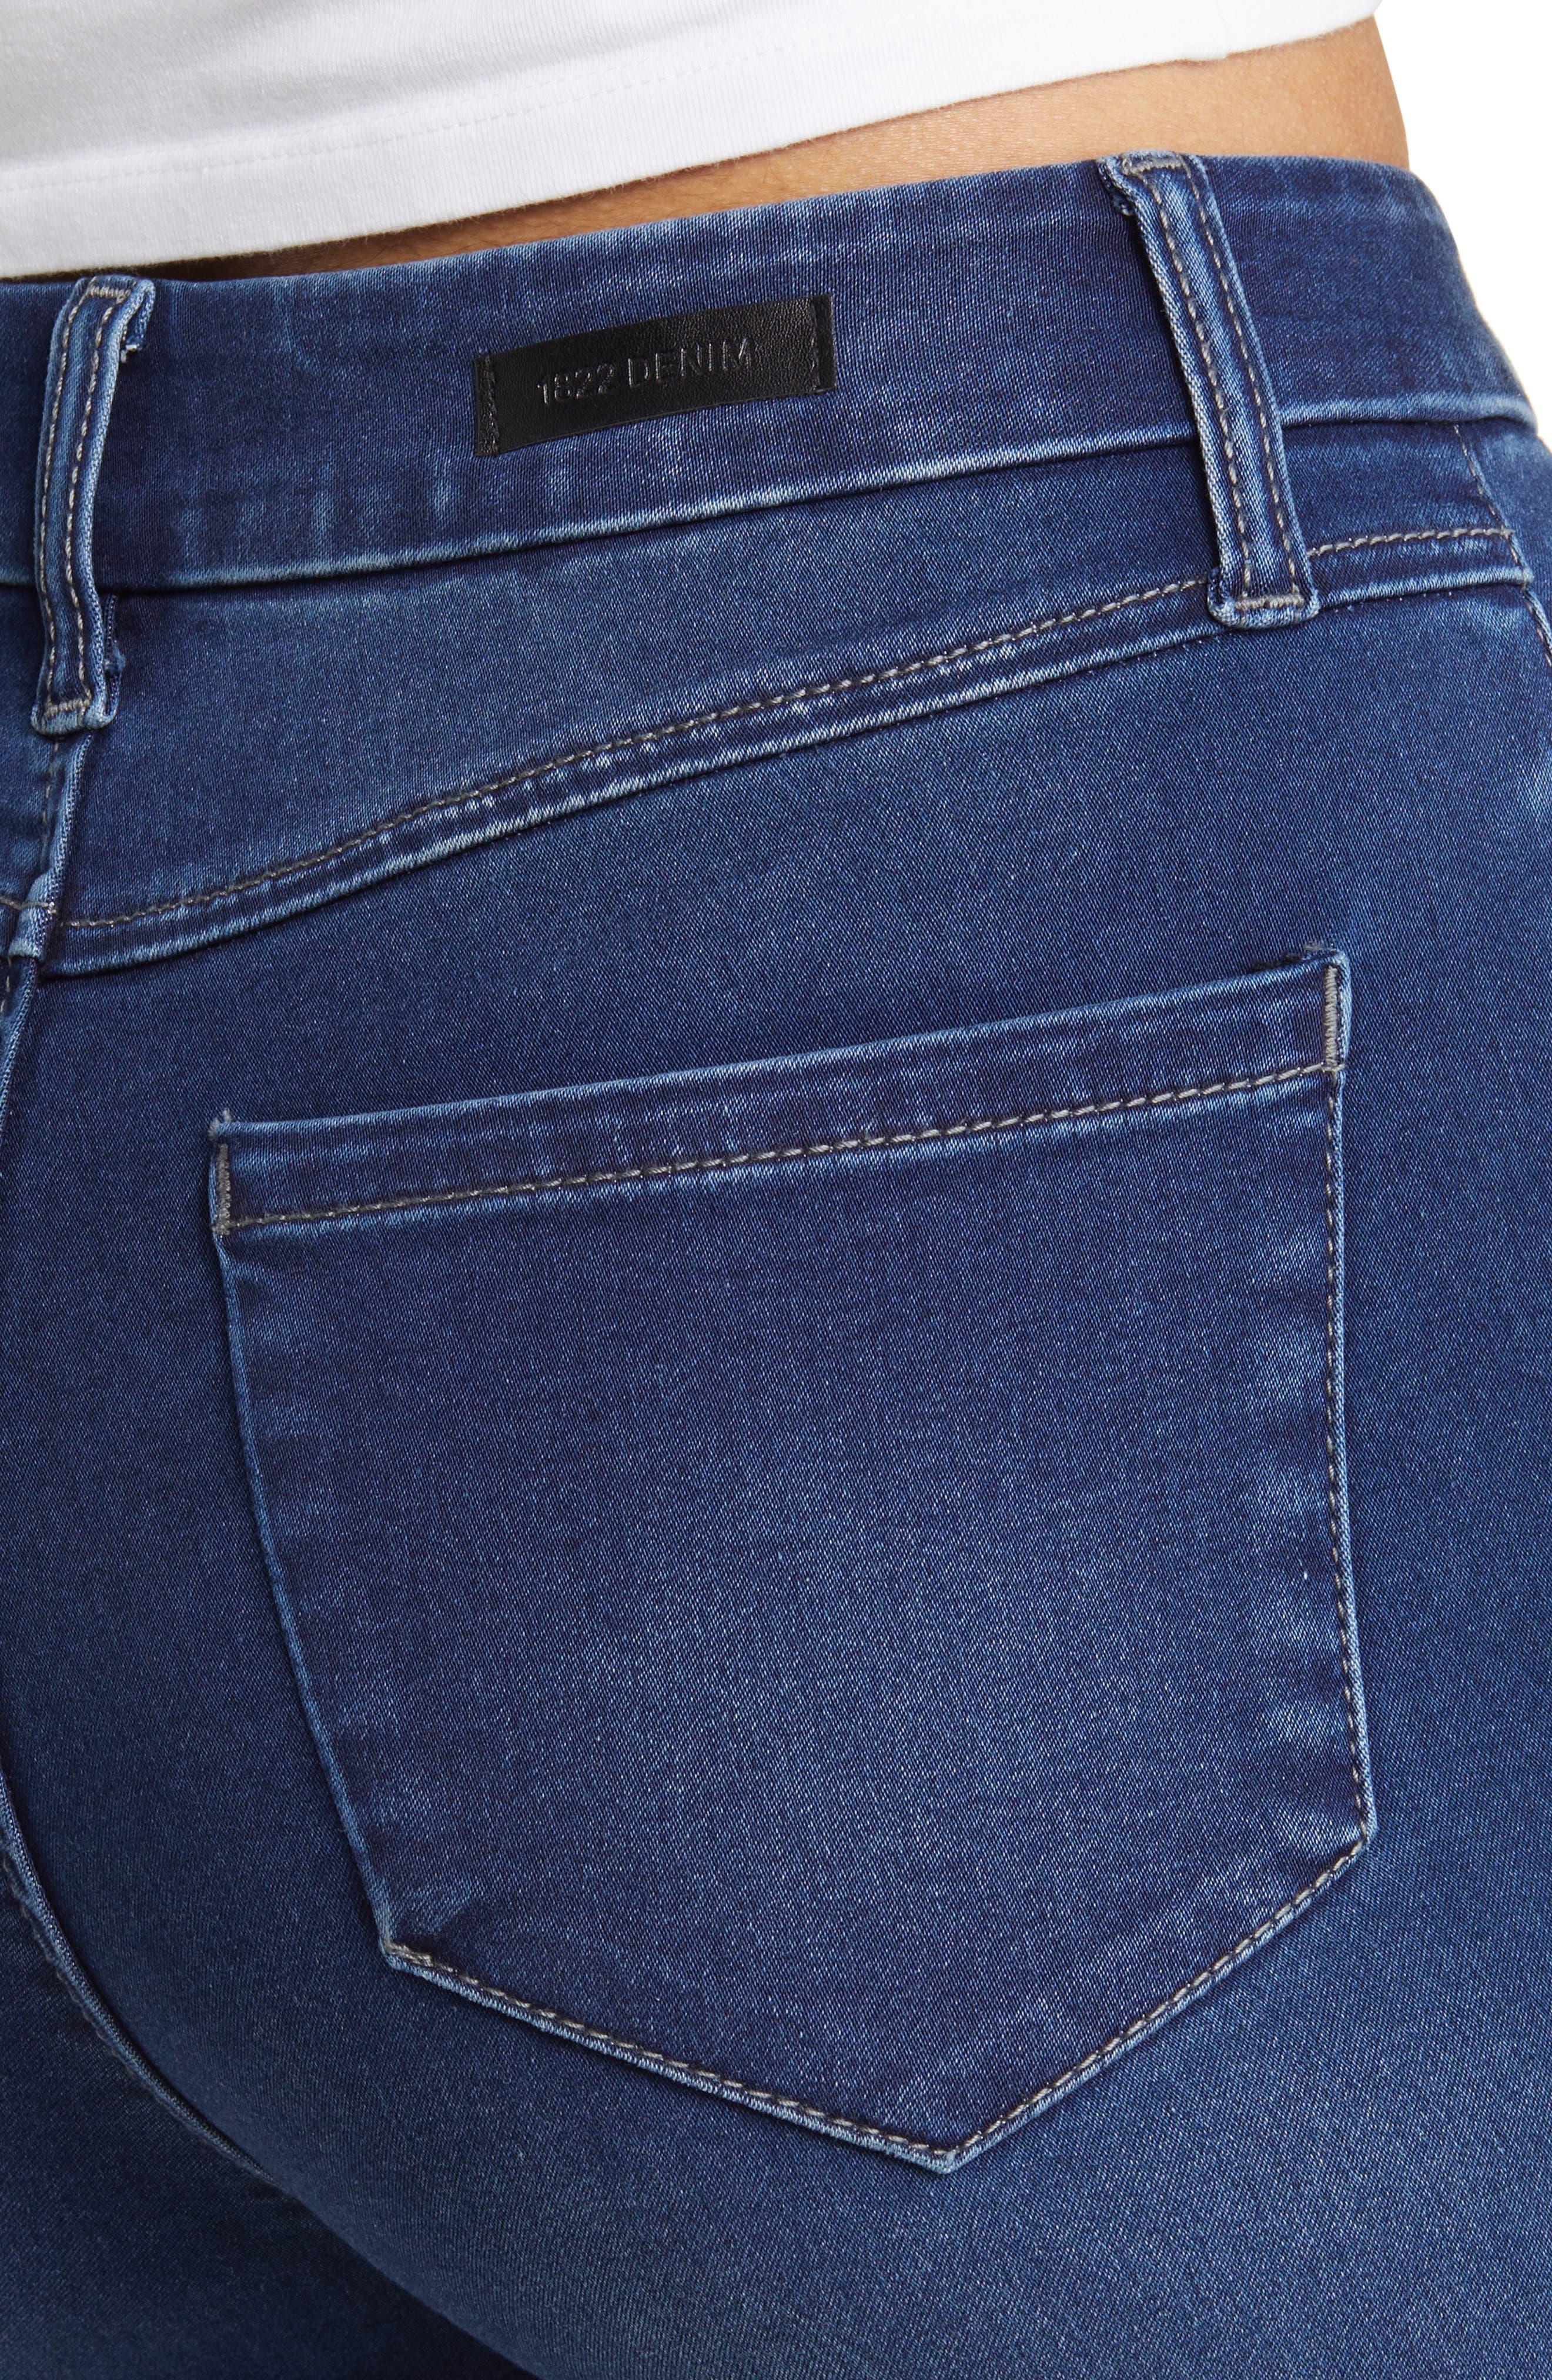 1822 Denim High Waist Flare Jeans